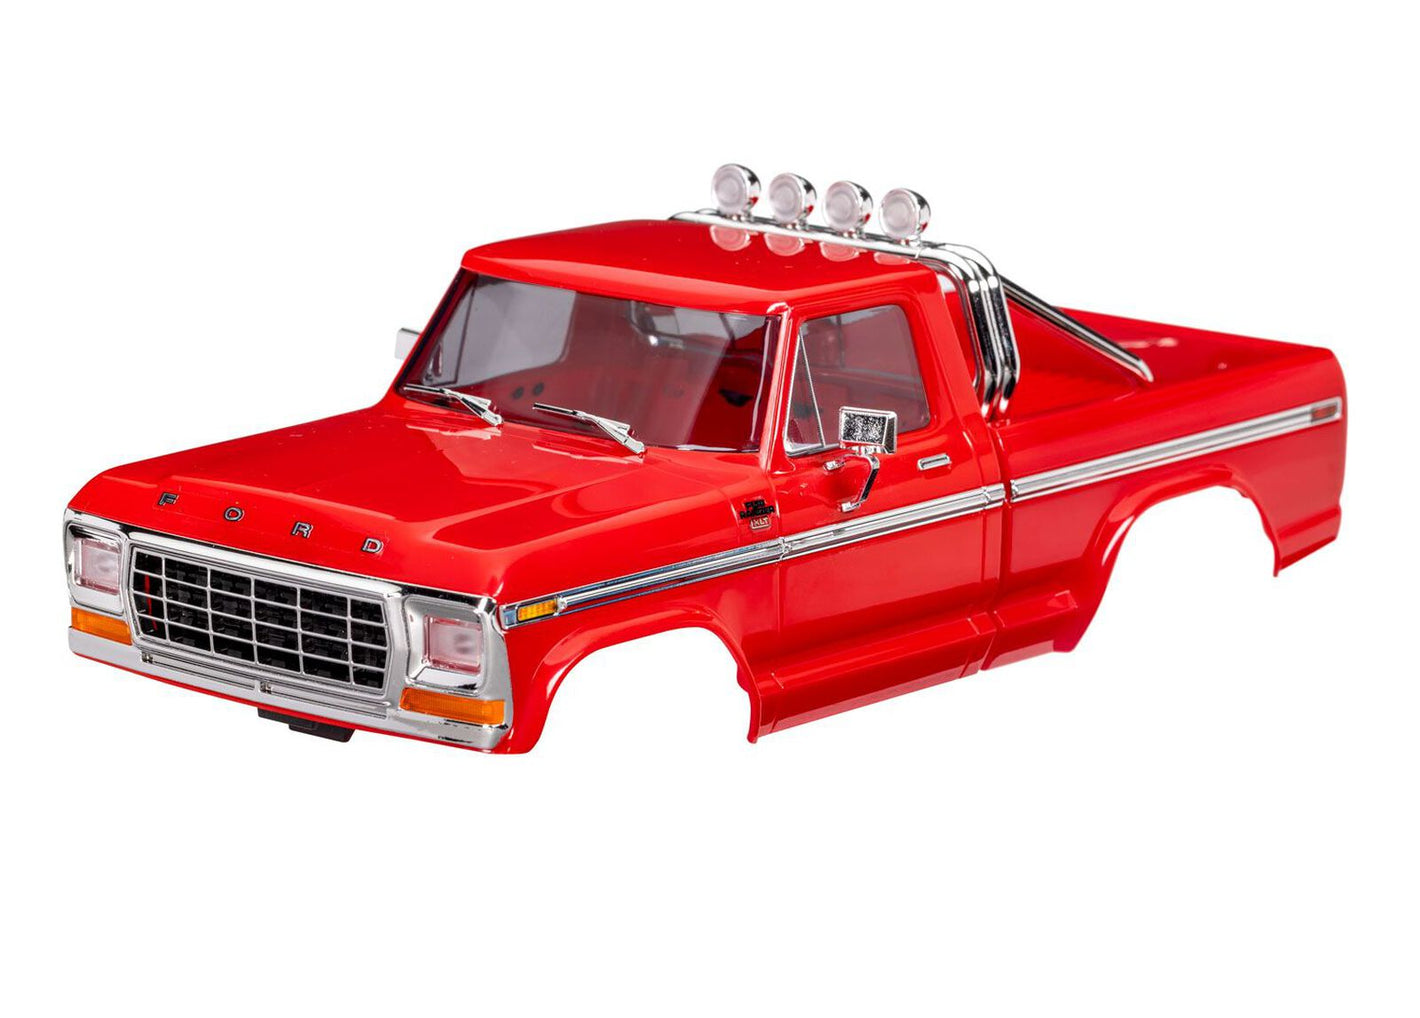 TRX-4M Ford F-150 Truck Body (Red)